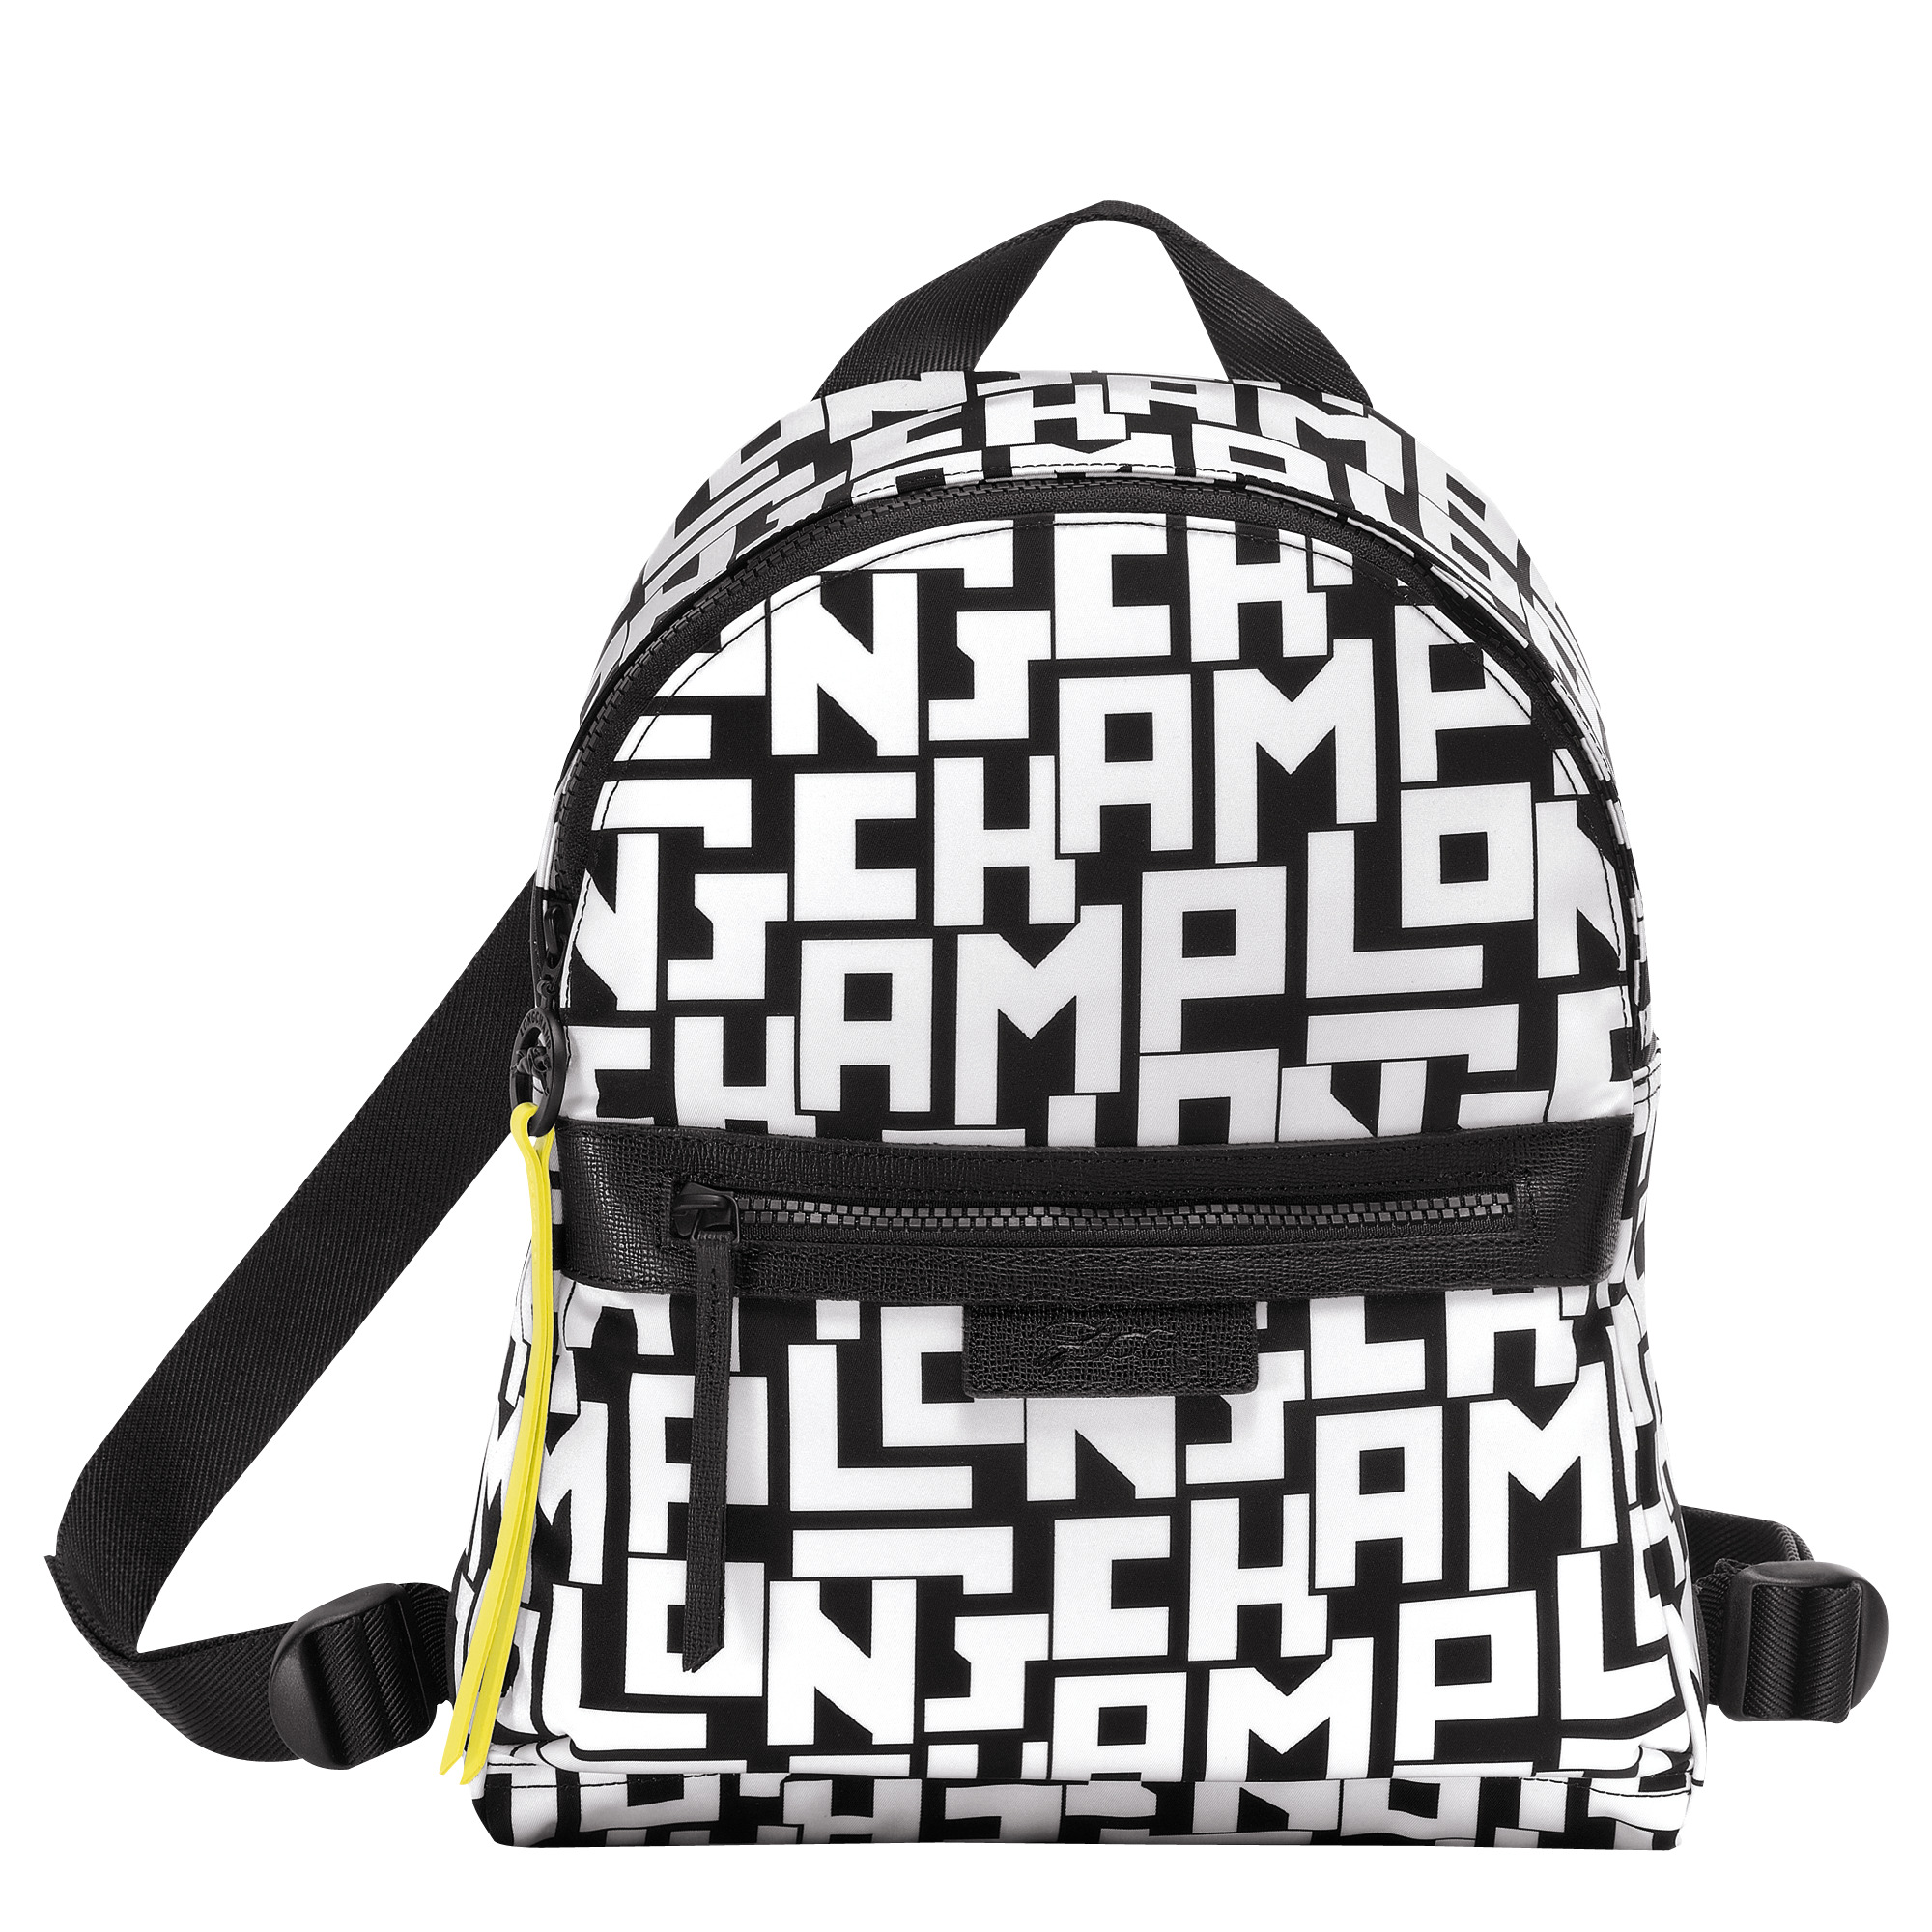 Le Pliage LGP S Backpack Black/White - Canvas - 1